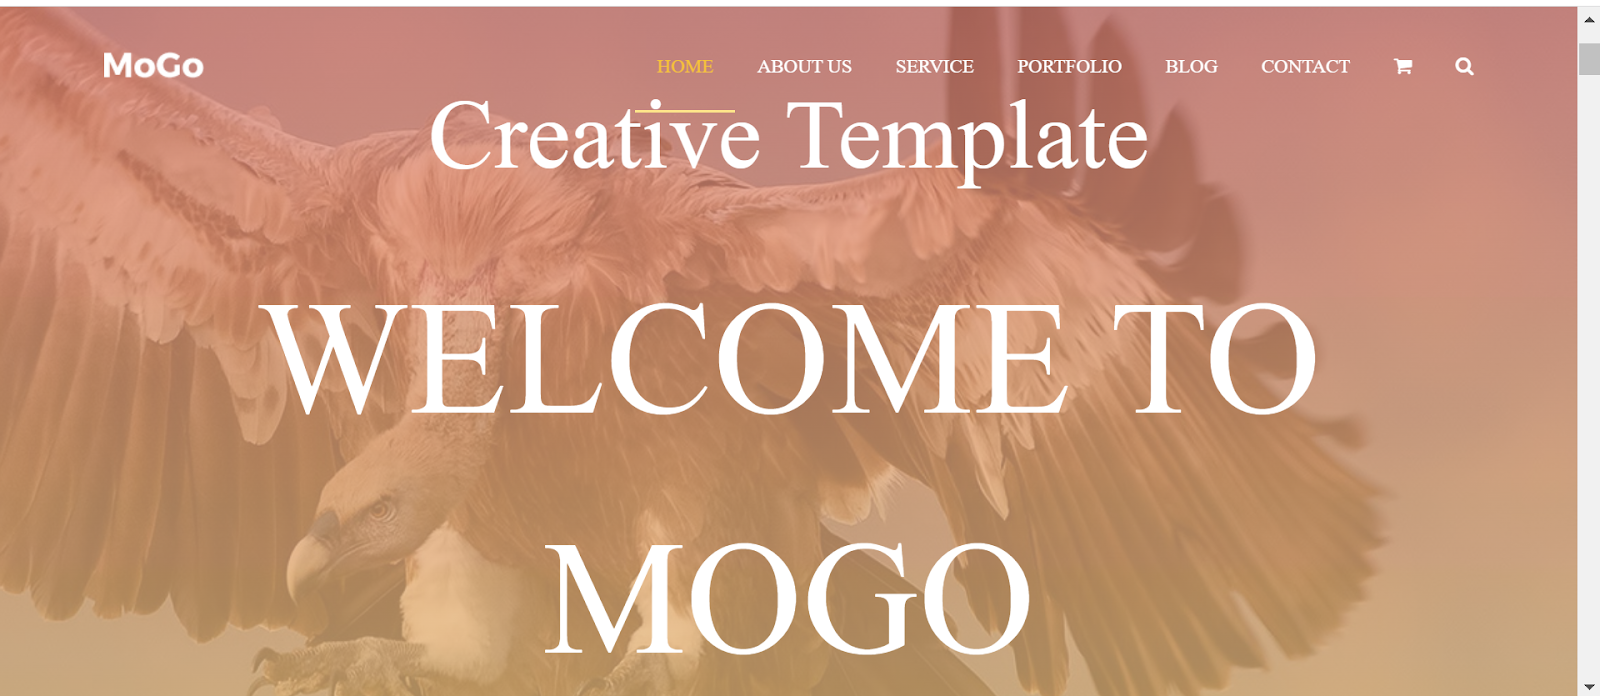 Bootstrap website templates, Mogo